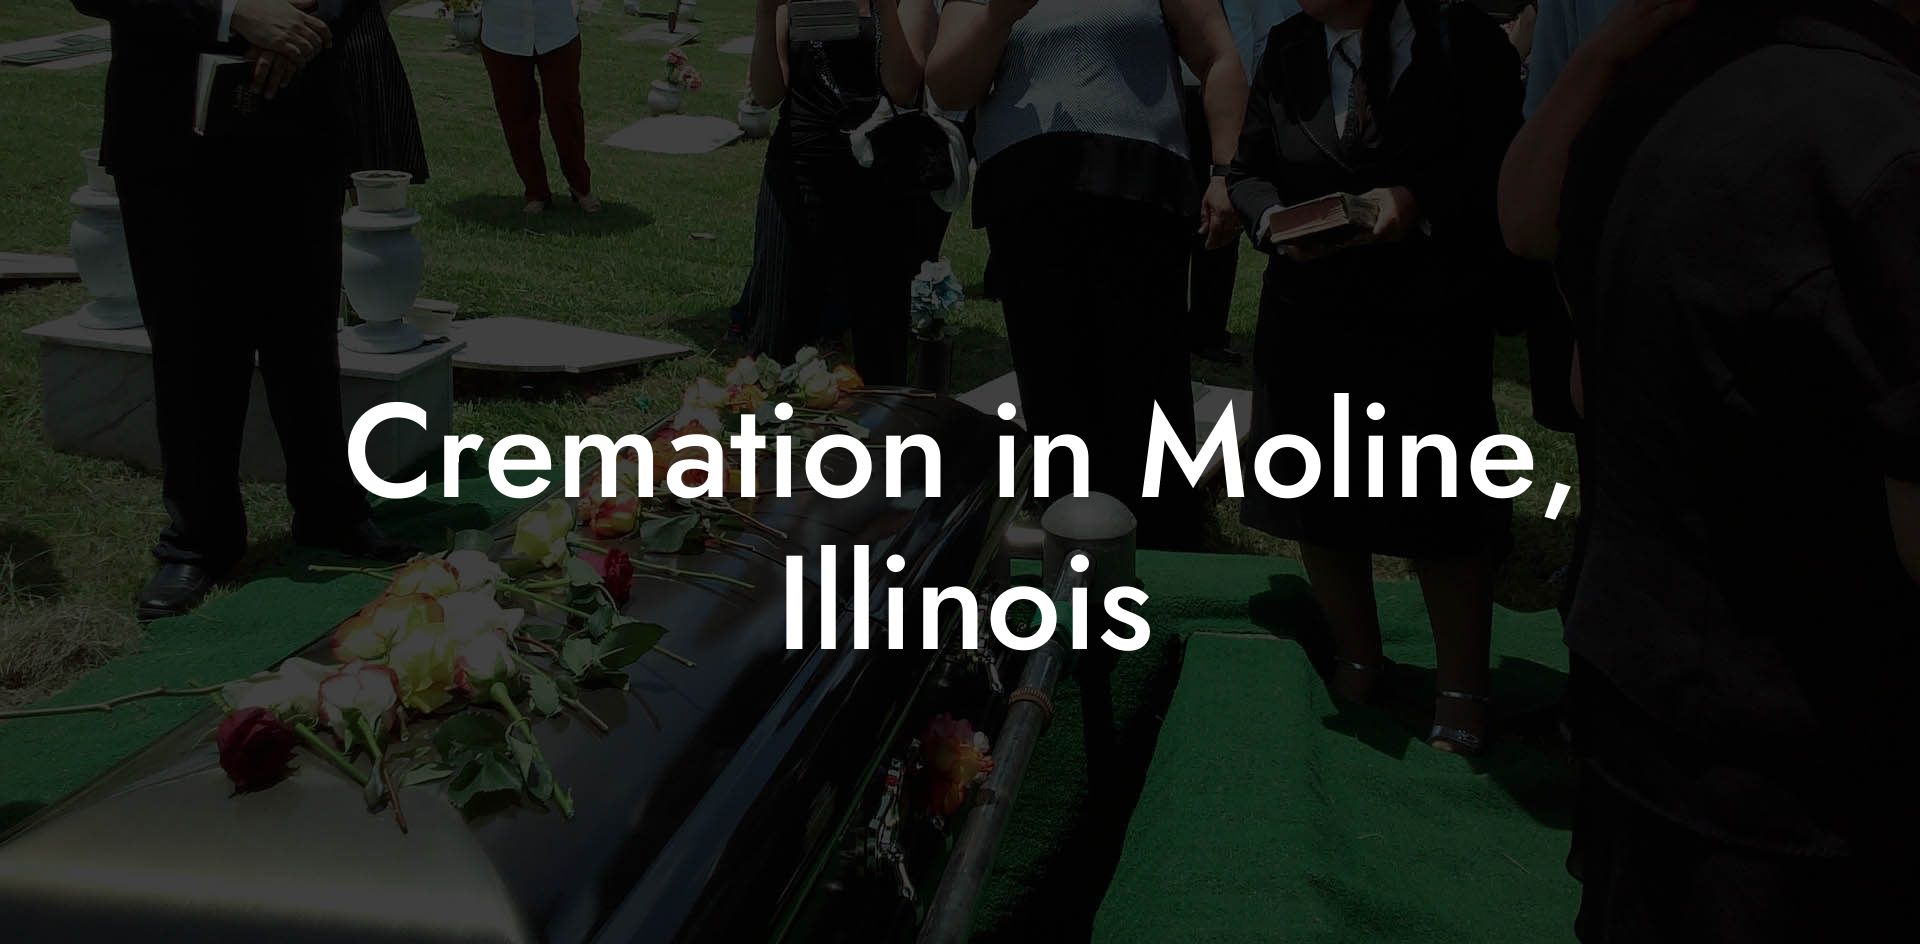 Cremation in Moline, Illinois